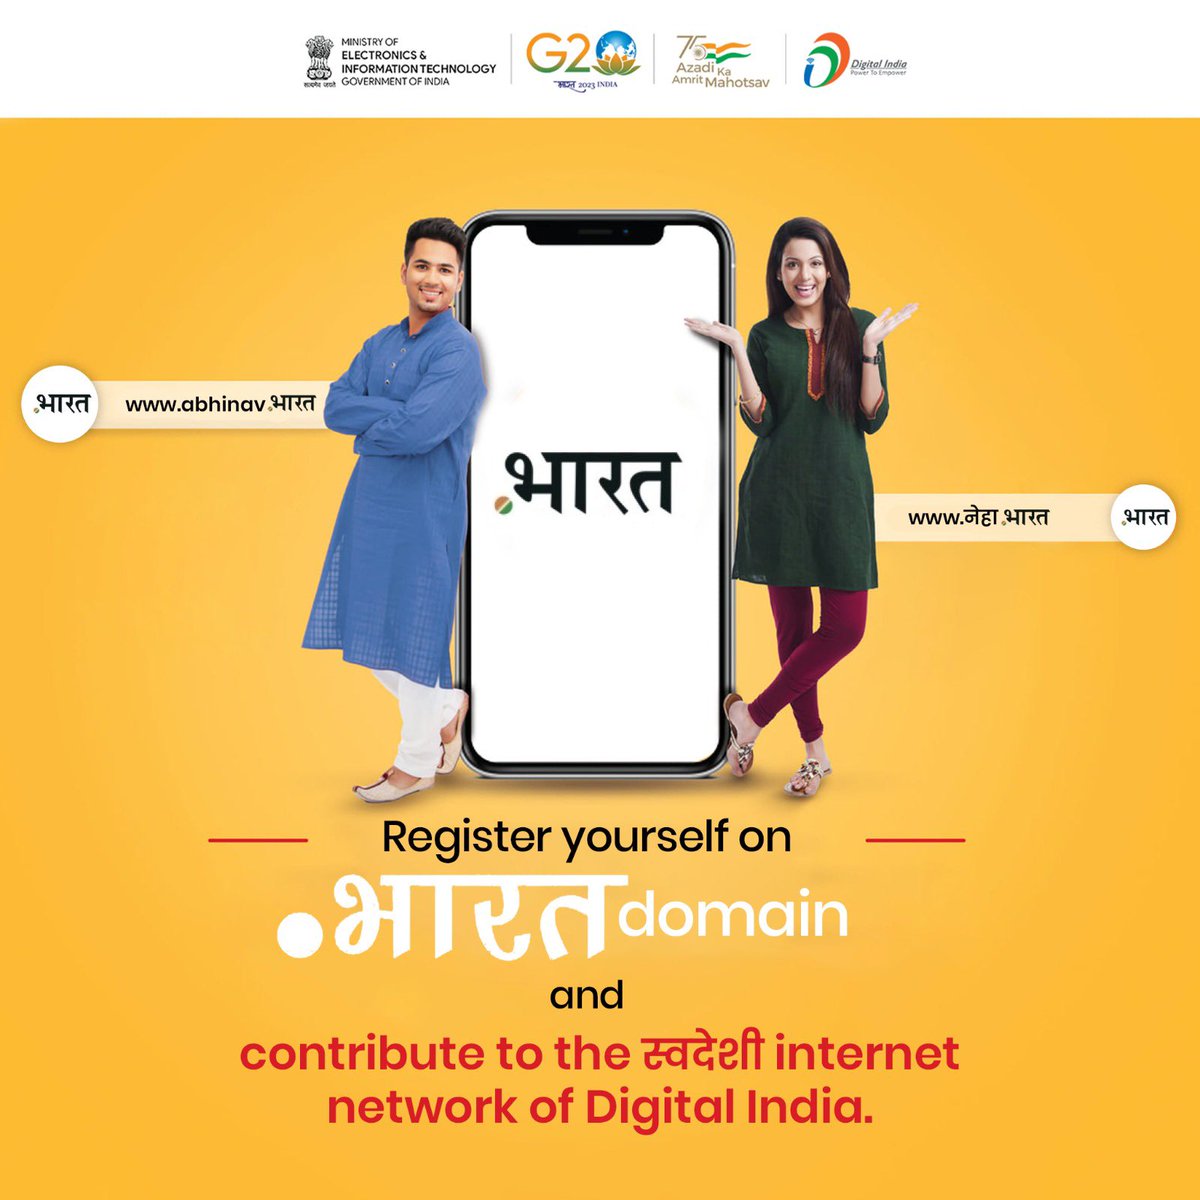 Have you registered your .भारत domain name yet? 🌐

#IndiaTechade #DigitalIndia #WorldWideWebDay 

@inregistry